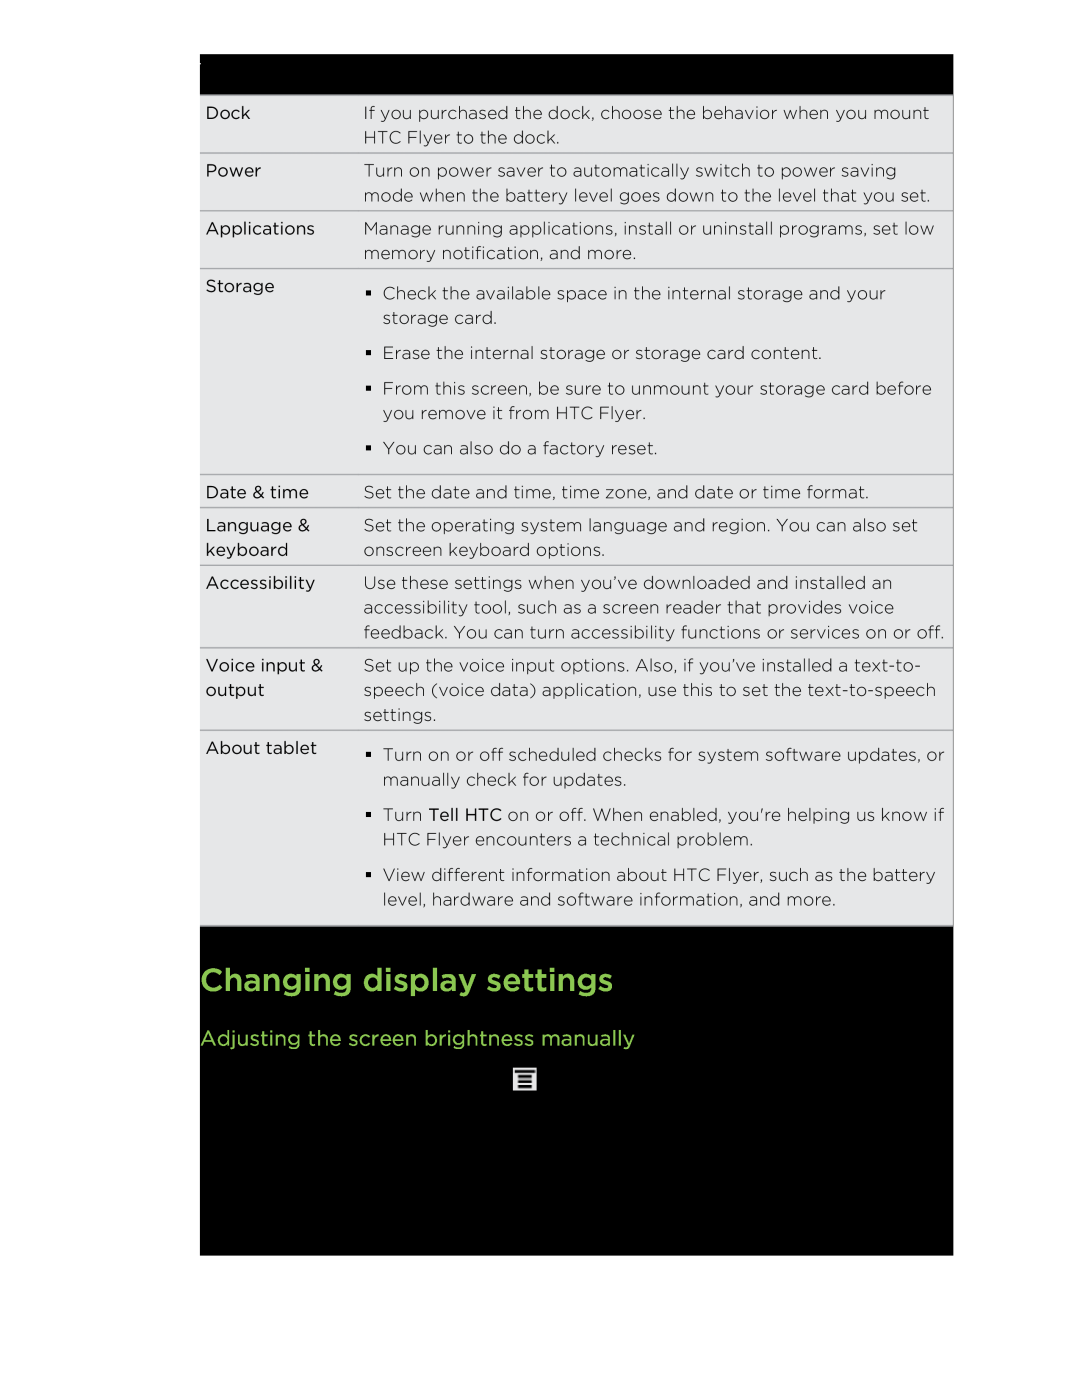 HTC HTCFlyerP512 Changing display settings, Adjusting the screen brightness manually 